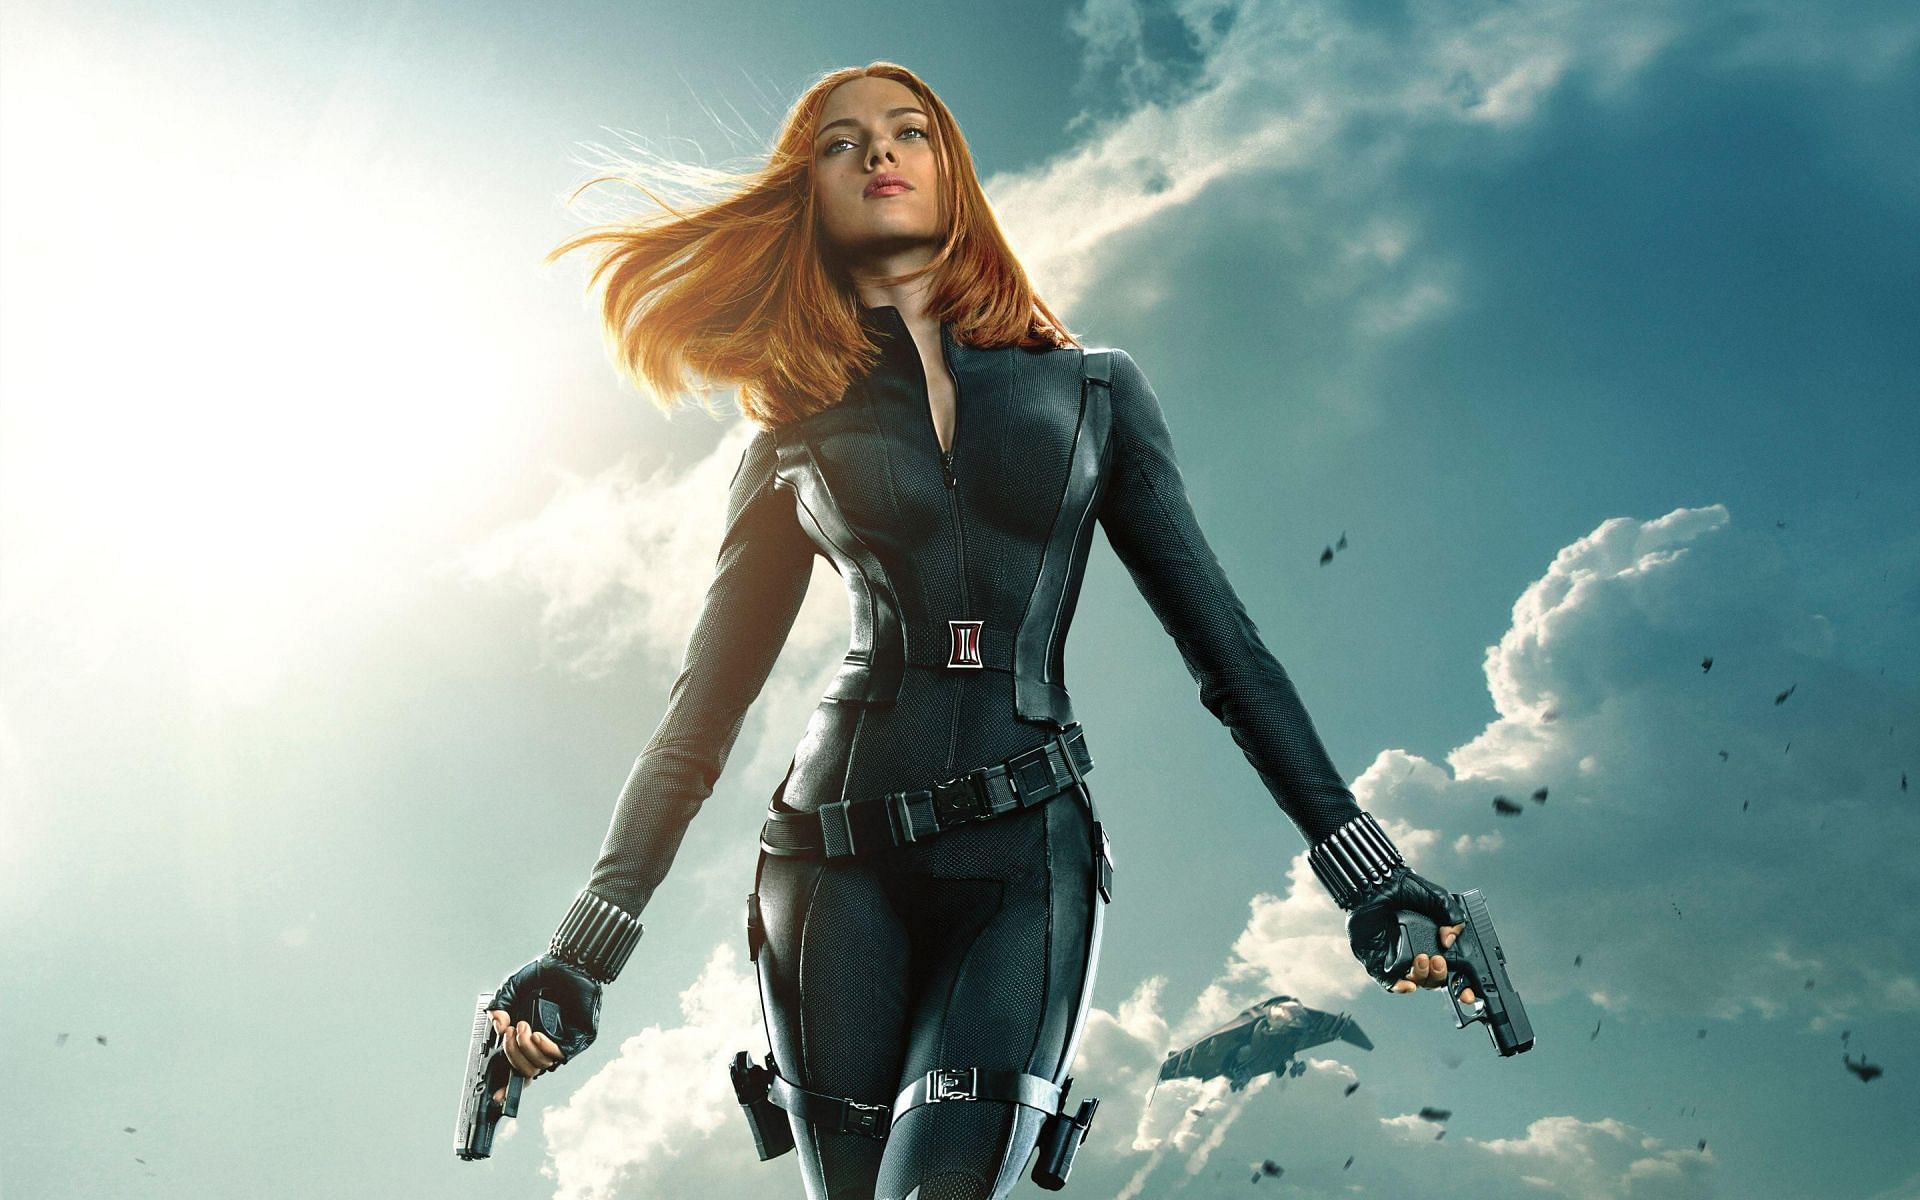 Enigmatic Black Widow in action  Image: Marvel Studios